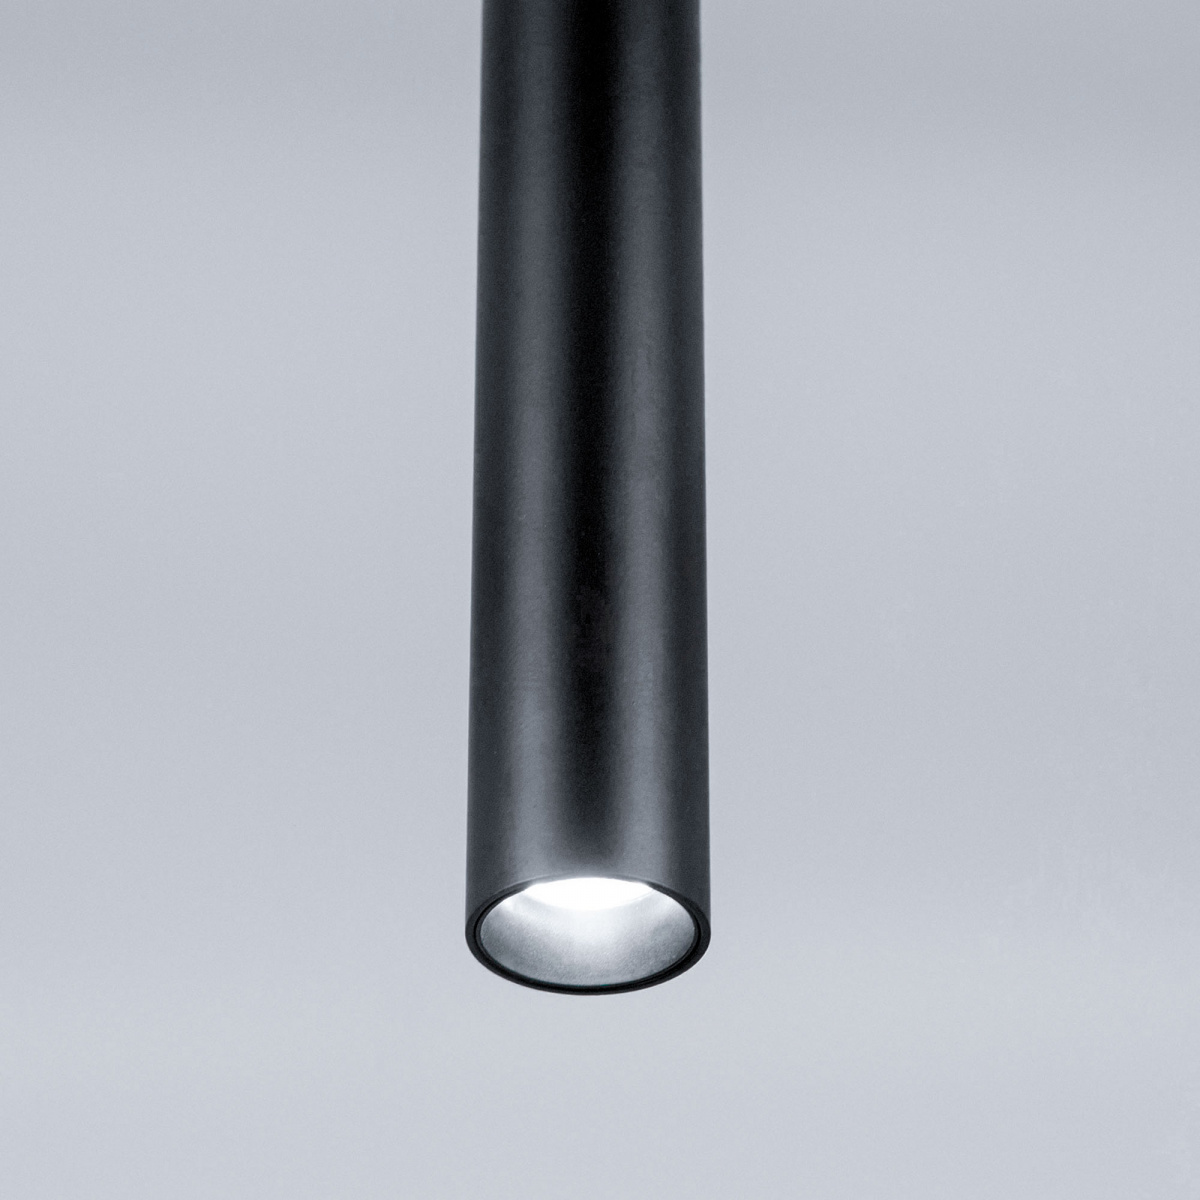 подвесной светильник citilux тубус (tubus), артикул CL01PBL071N